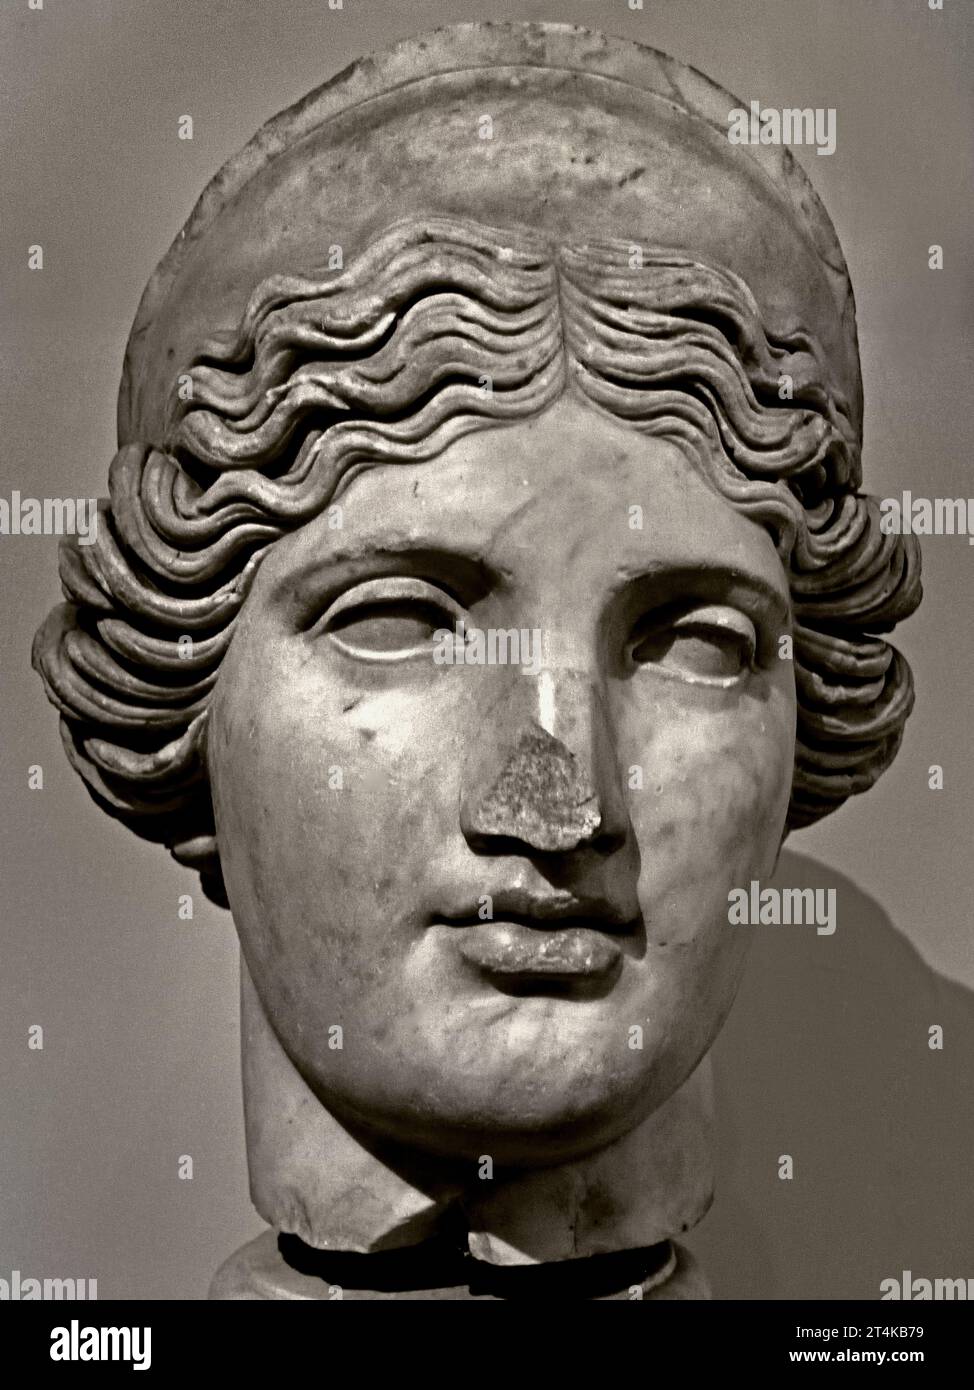 Testa colossale di Iuno, Giunone Farnese - Colossal head of Iuno, so-called. Juno Farnese                                  National Archaeological Museum of Naples Italy. Stock Photo